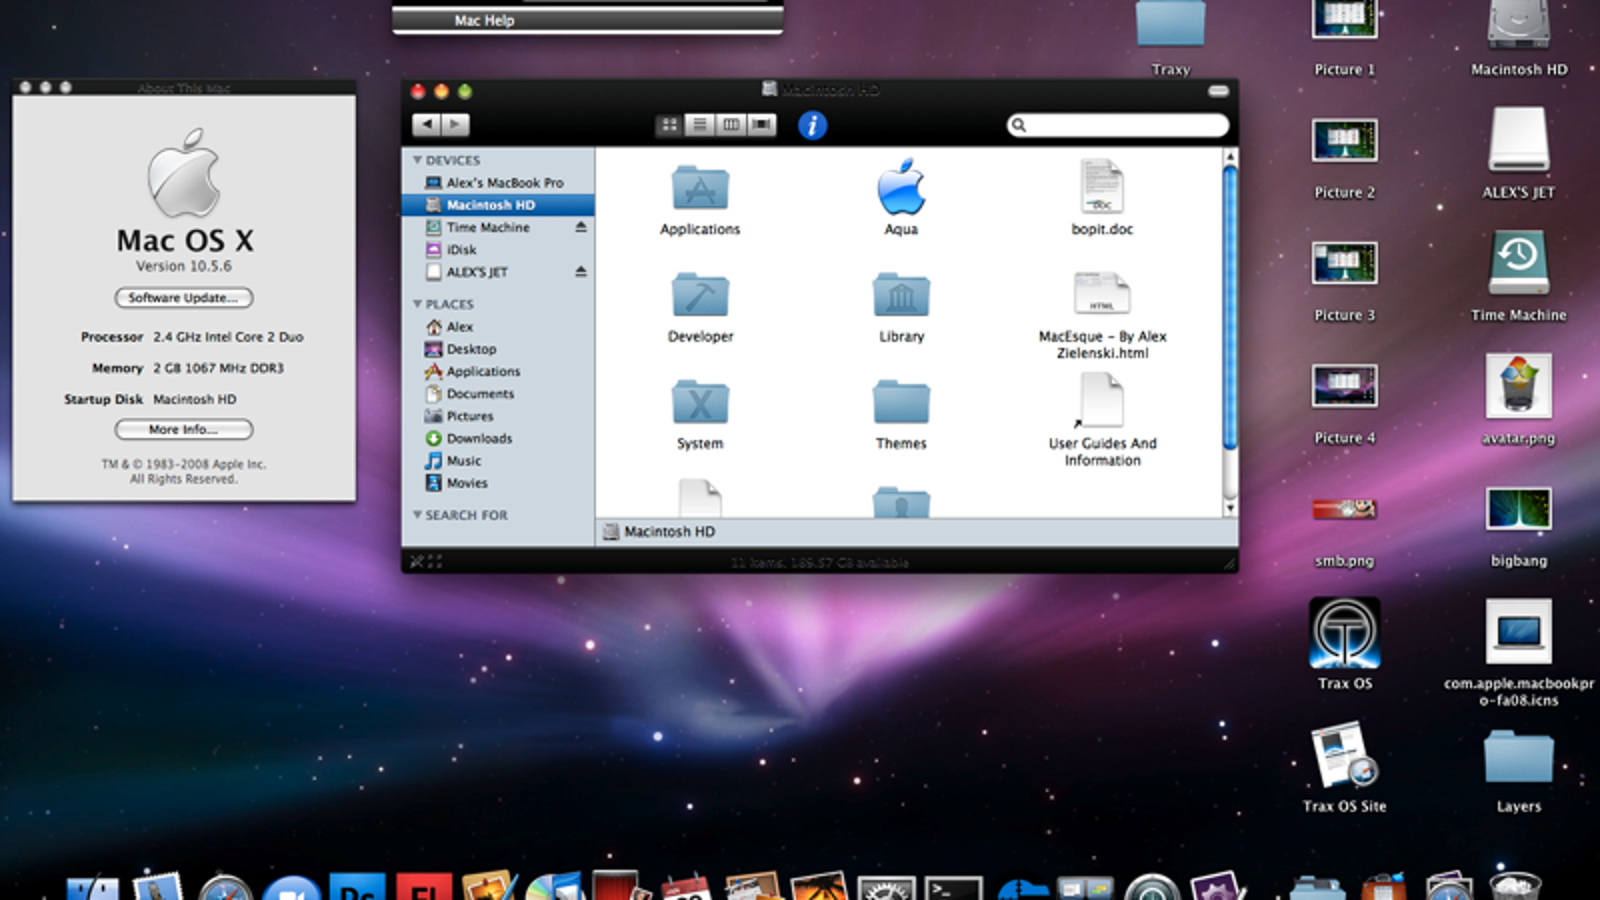 how to install mac os on virtualbox